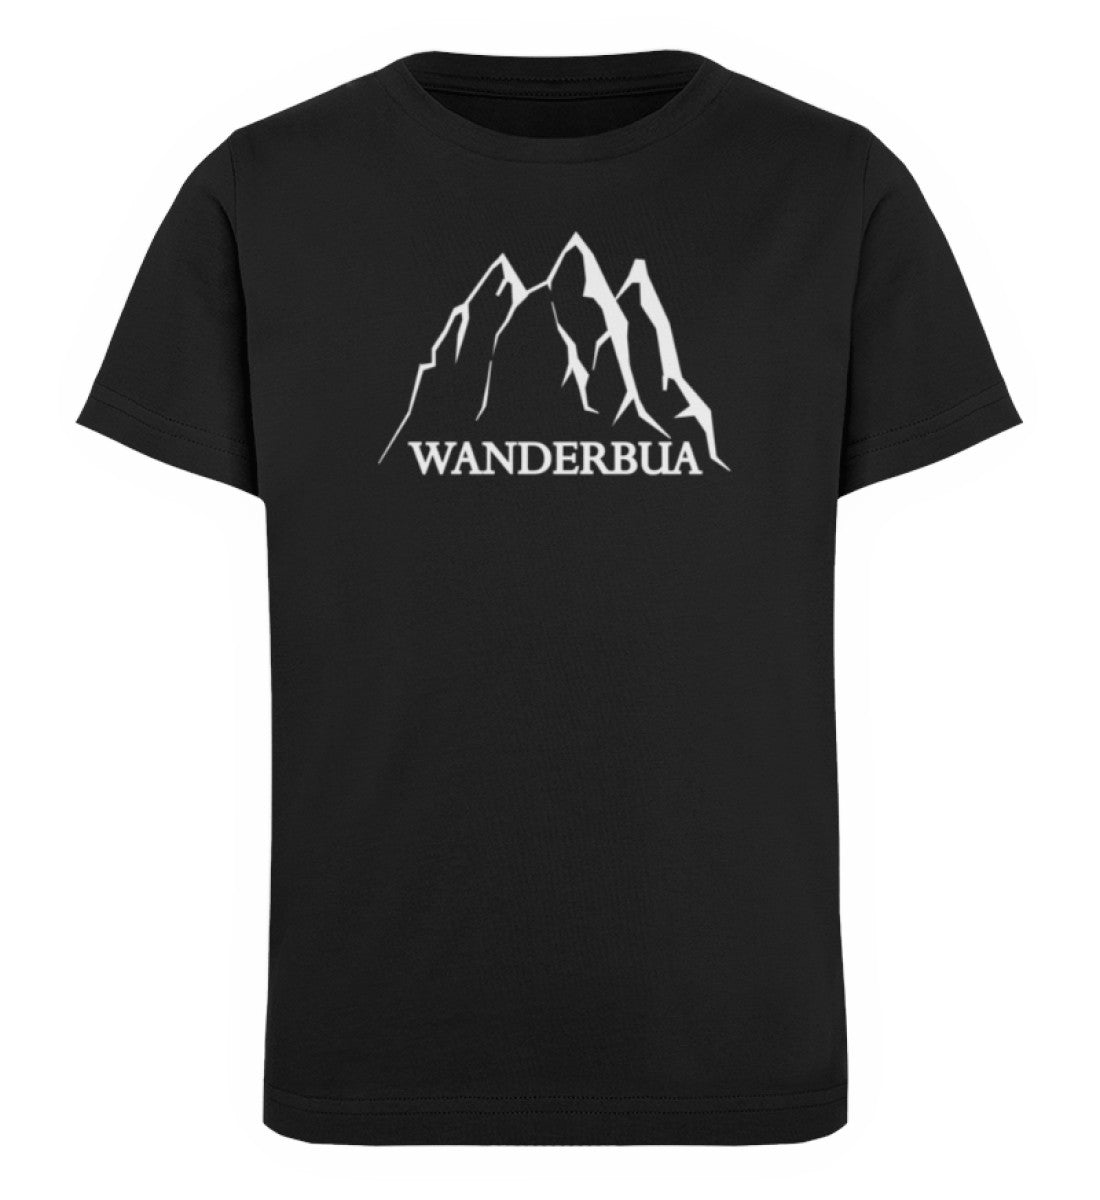 Wanderbua - Kinder Premium Organic T-Shirt Schwarz